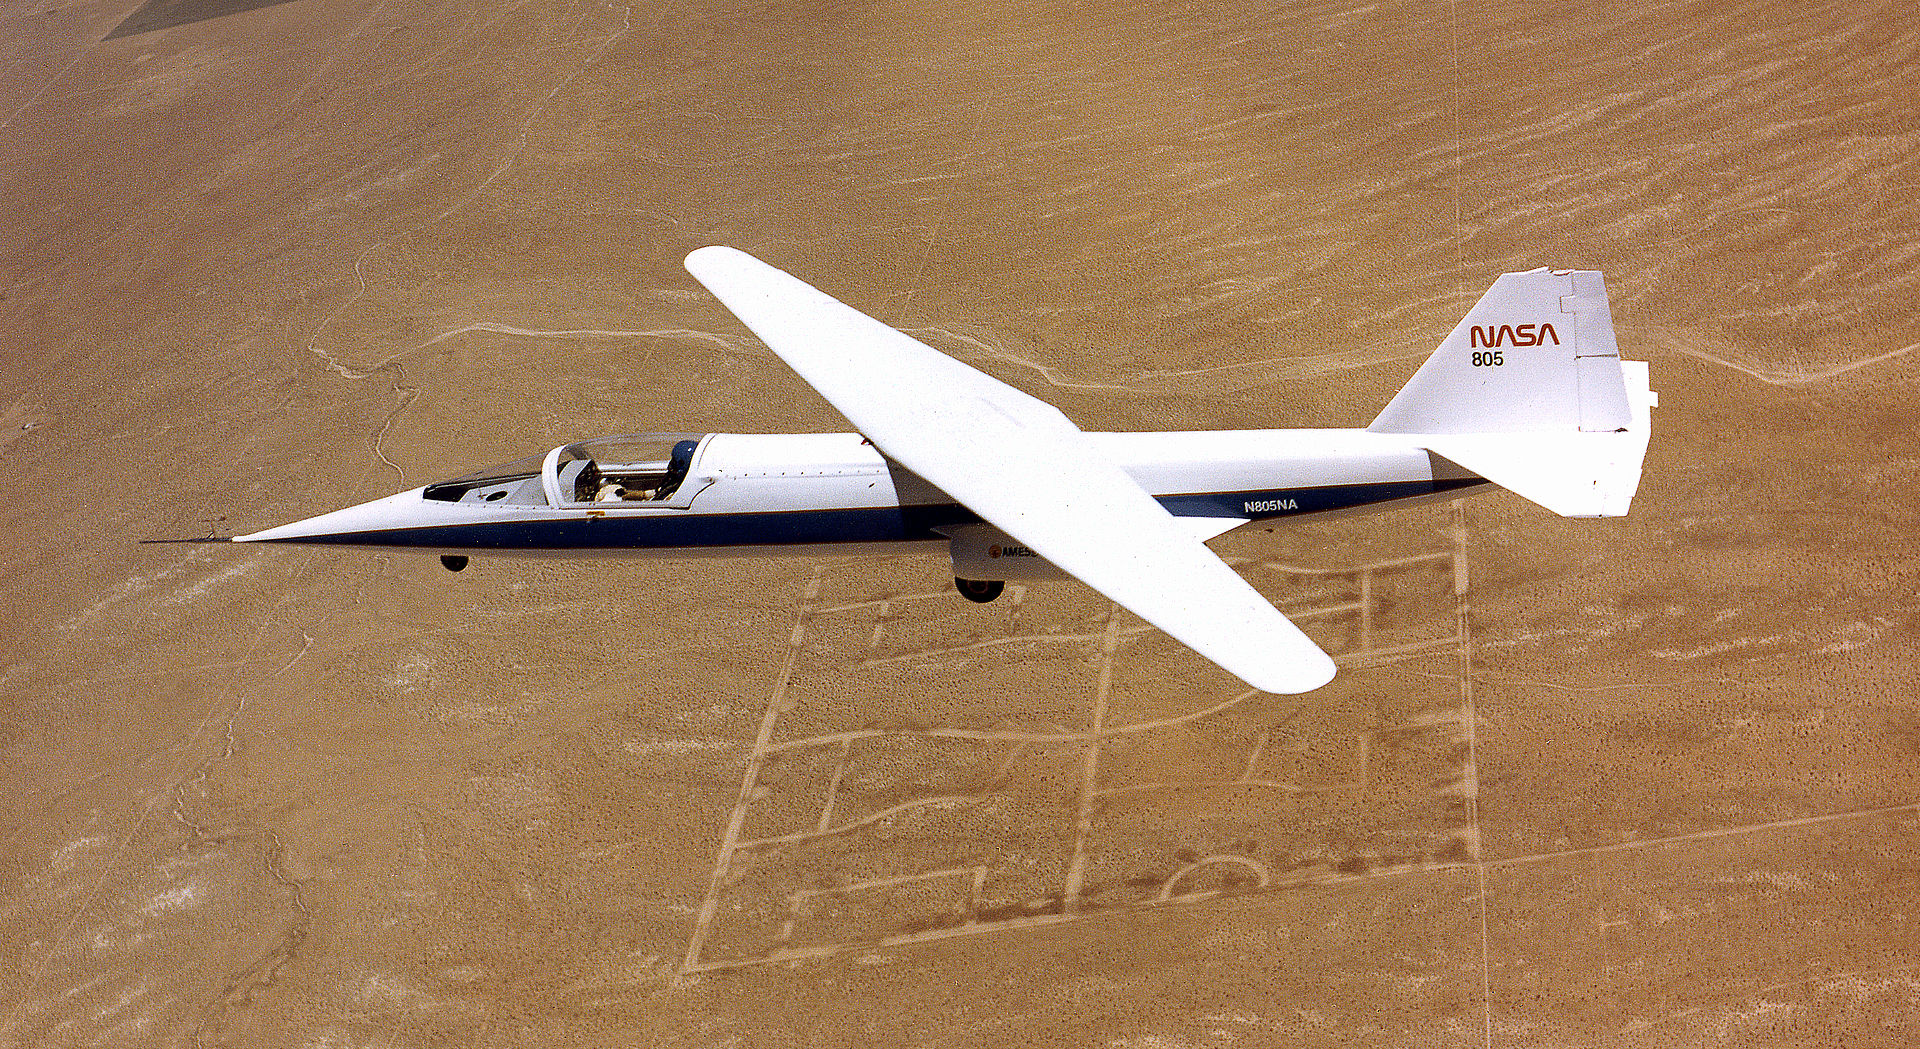 The AD-1 in flight.